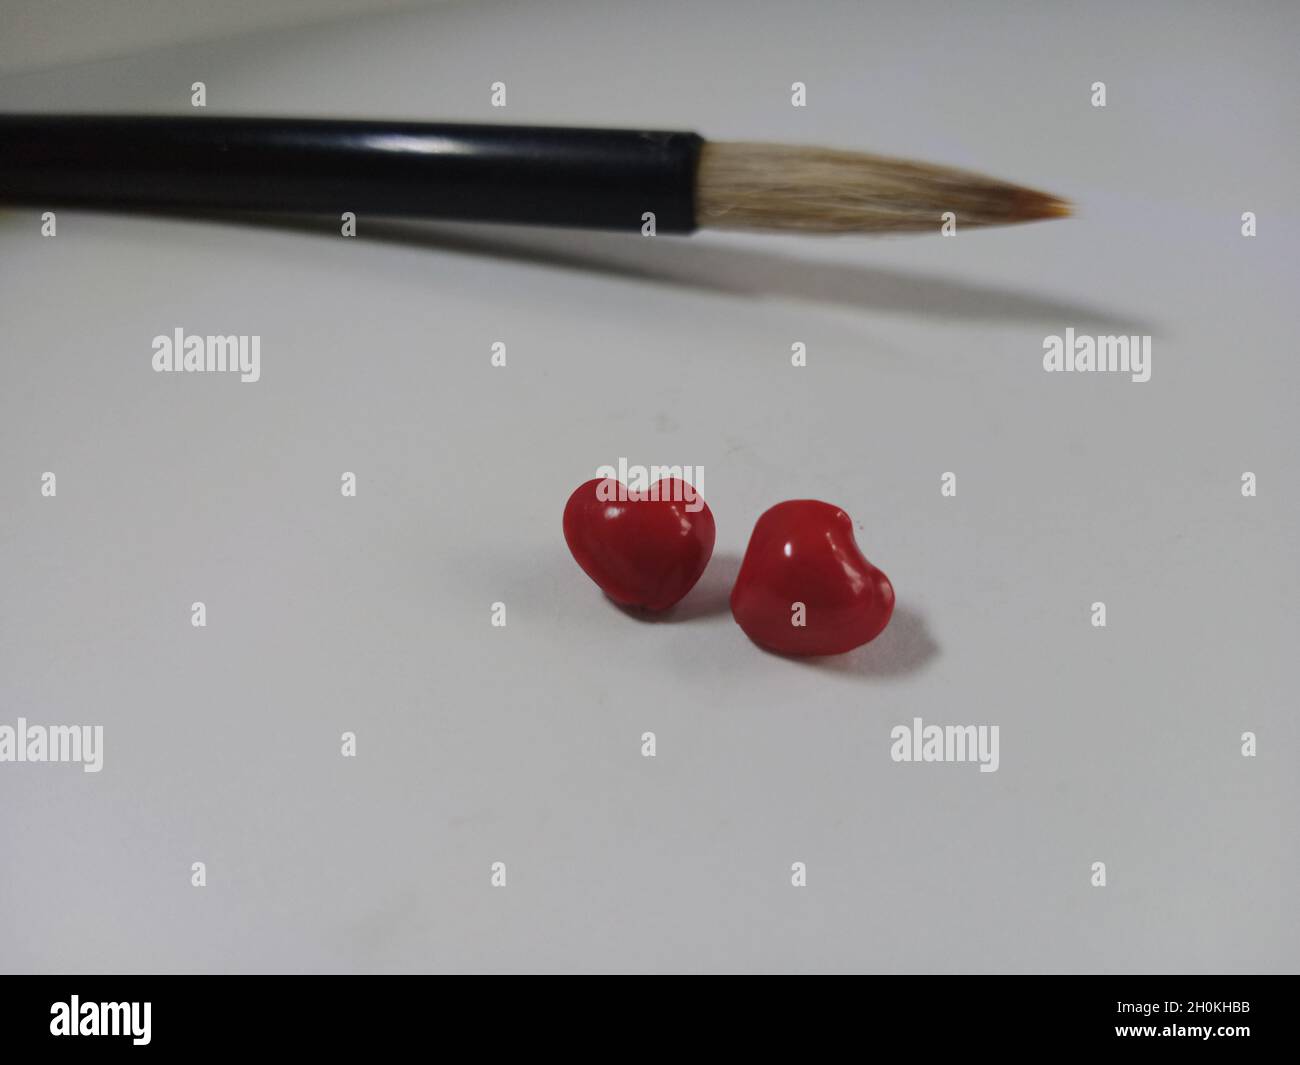 china brush with red heart shape saga seeds Stock Photo